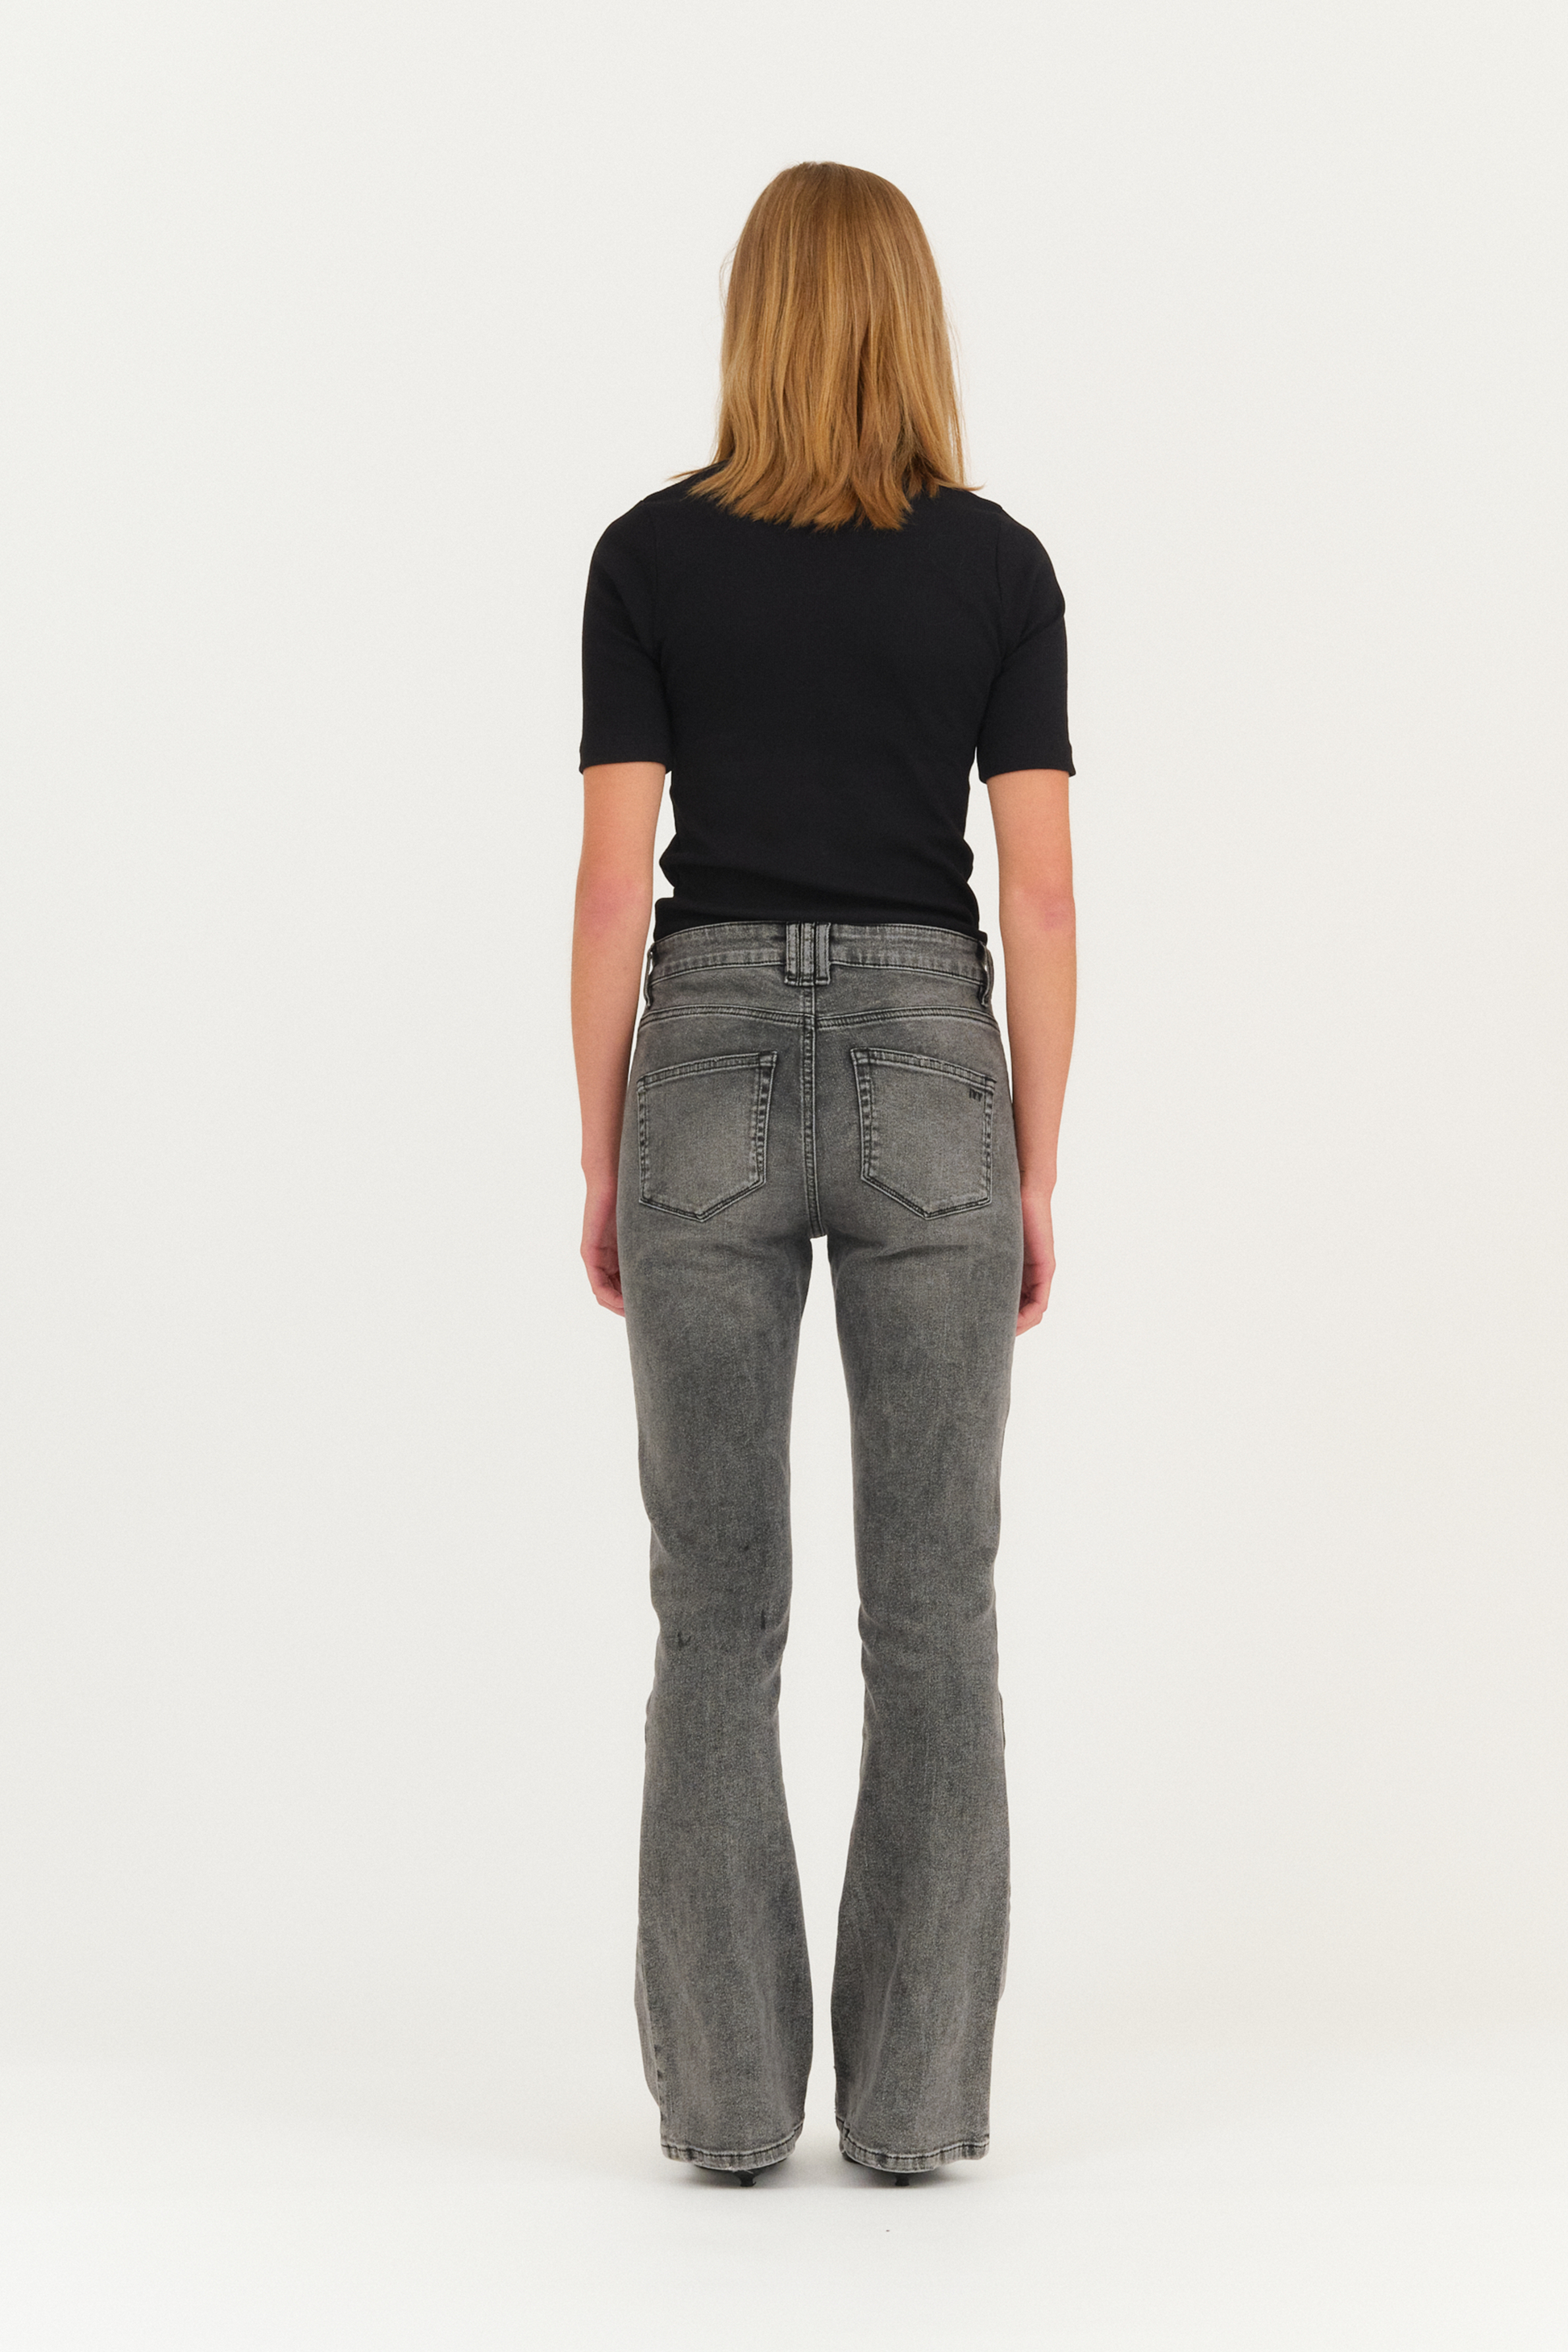 IVY Copenhagen IVY-Tara Jeans Wash Rockstar Grey Jeans & Pants 8 Grey